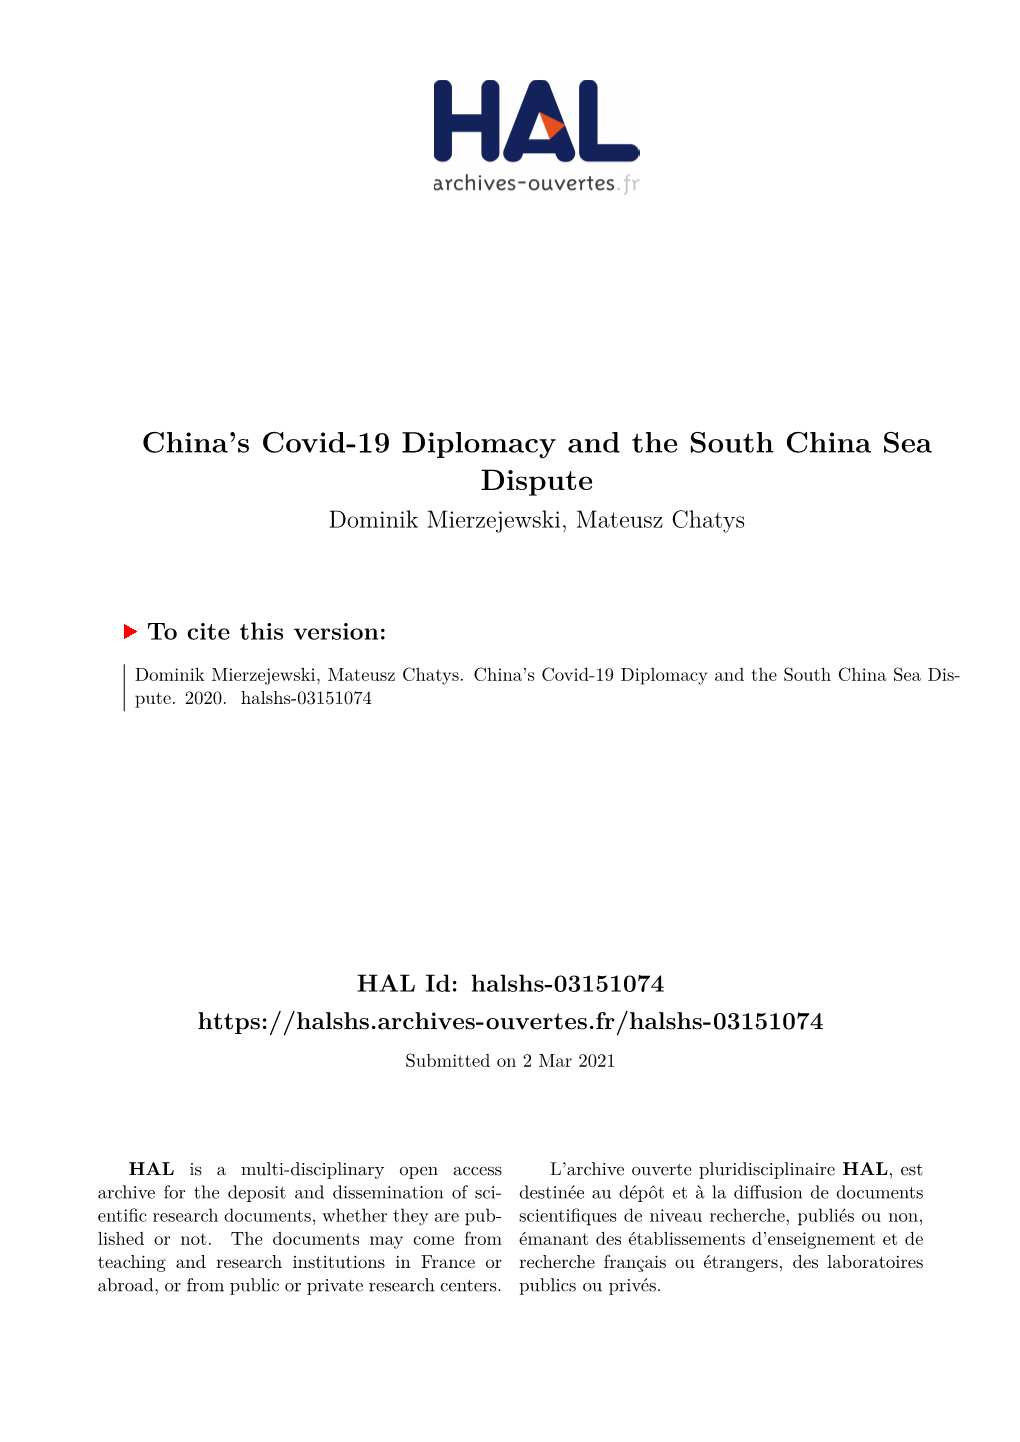 China's Covid-19 Diplomacy and the South China Sea Dispute